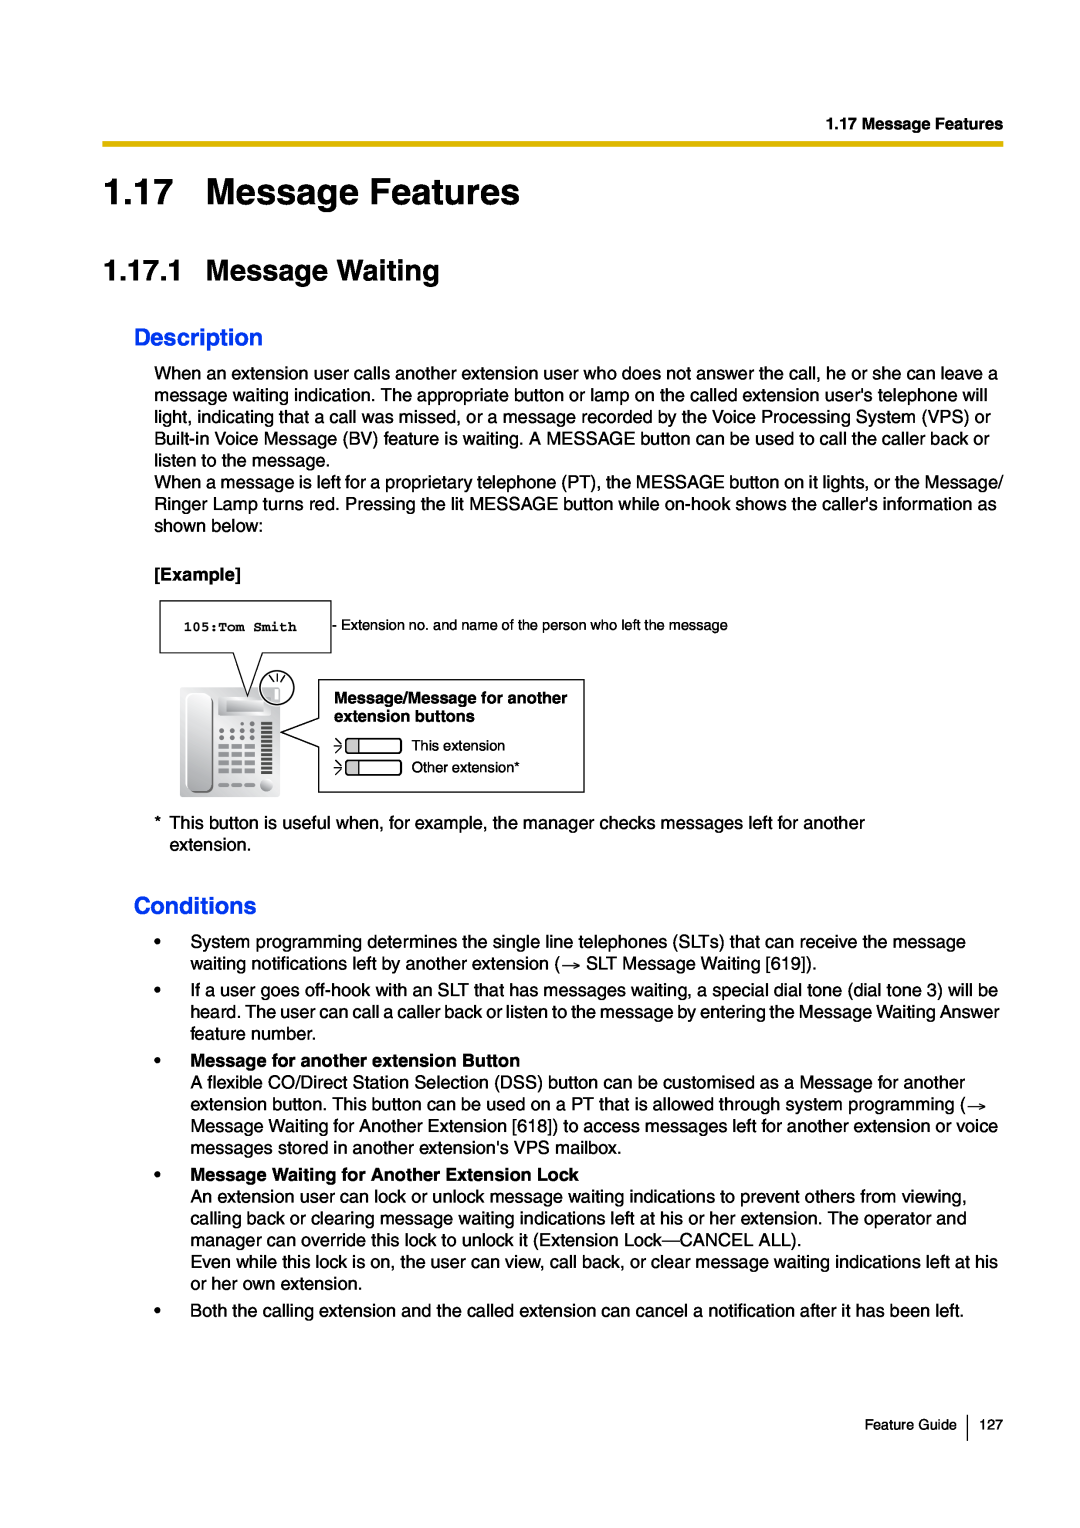 Panasonic kx-tea308 manual Message Features, Message Waiting, Description, Conditions, Example 